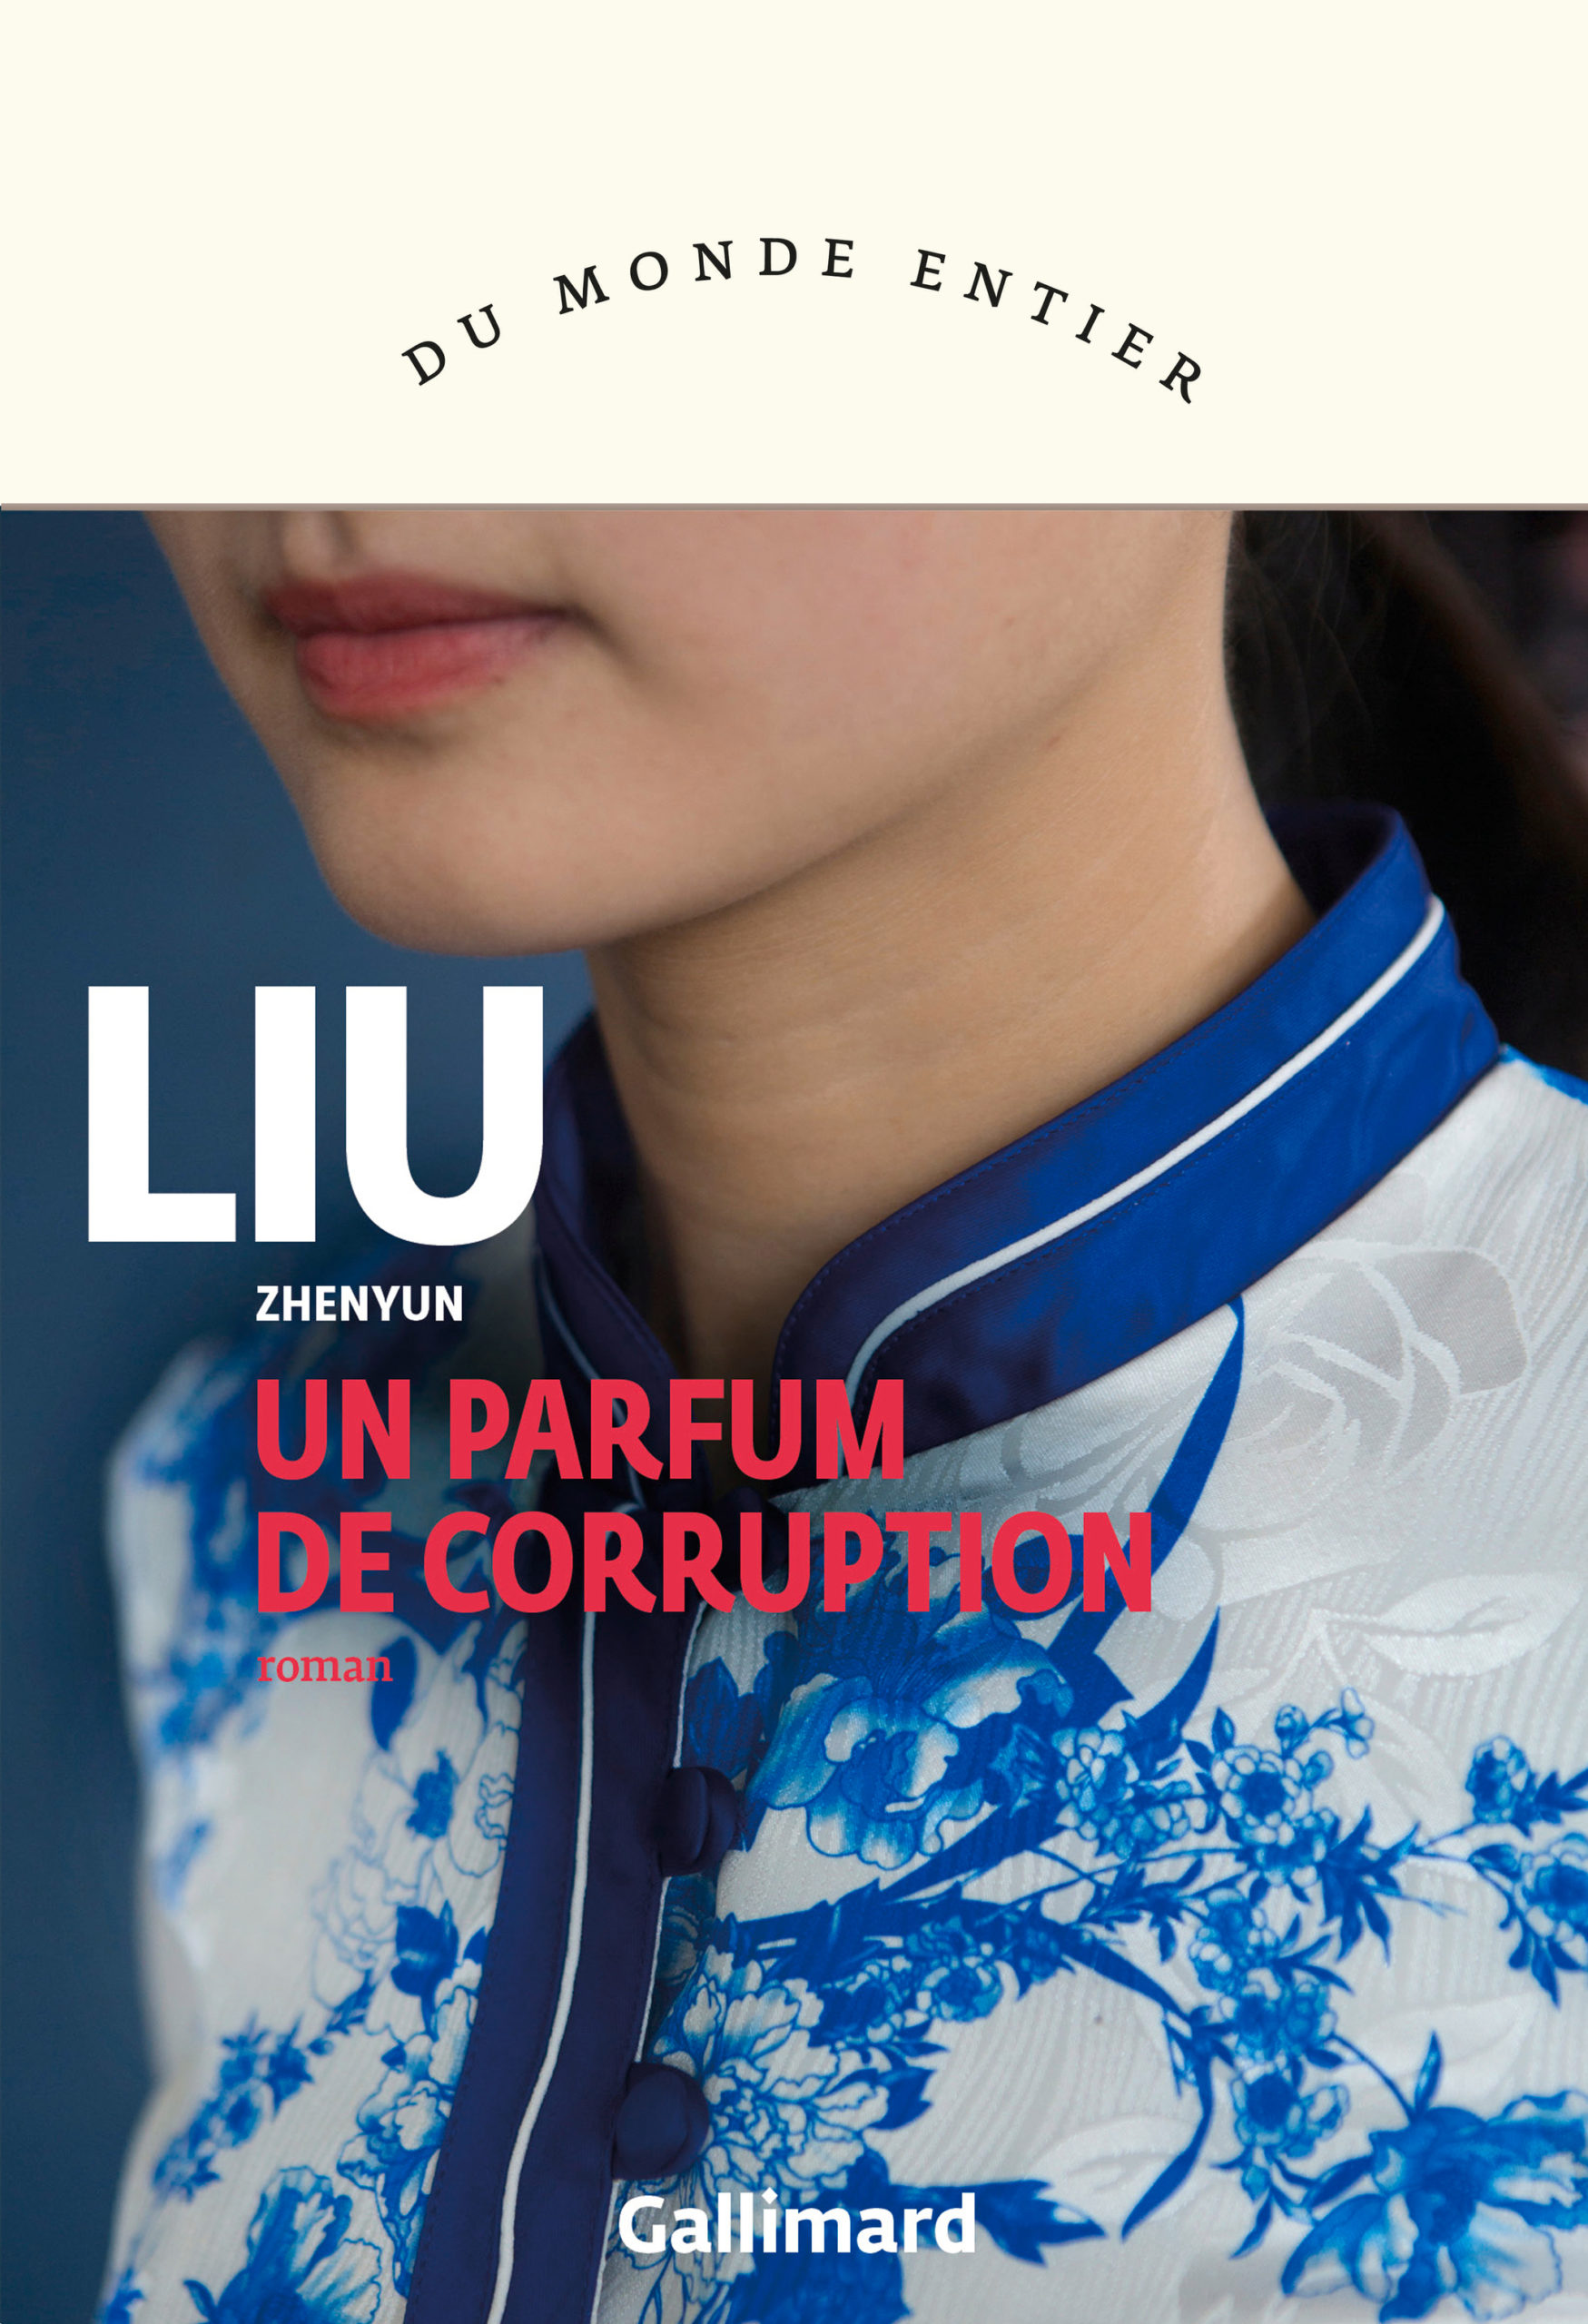 Un parfum de corruption de Zhenyun Liu sort en librairie.